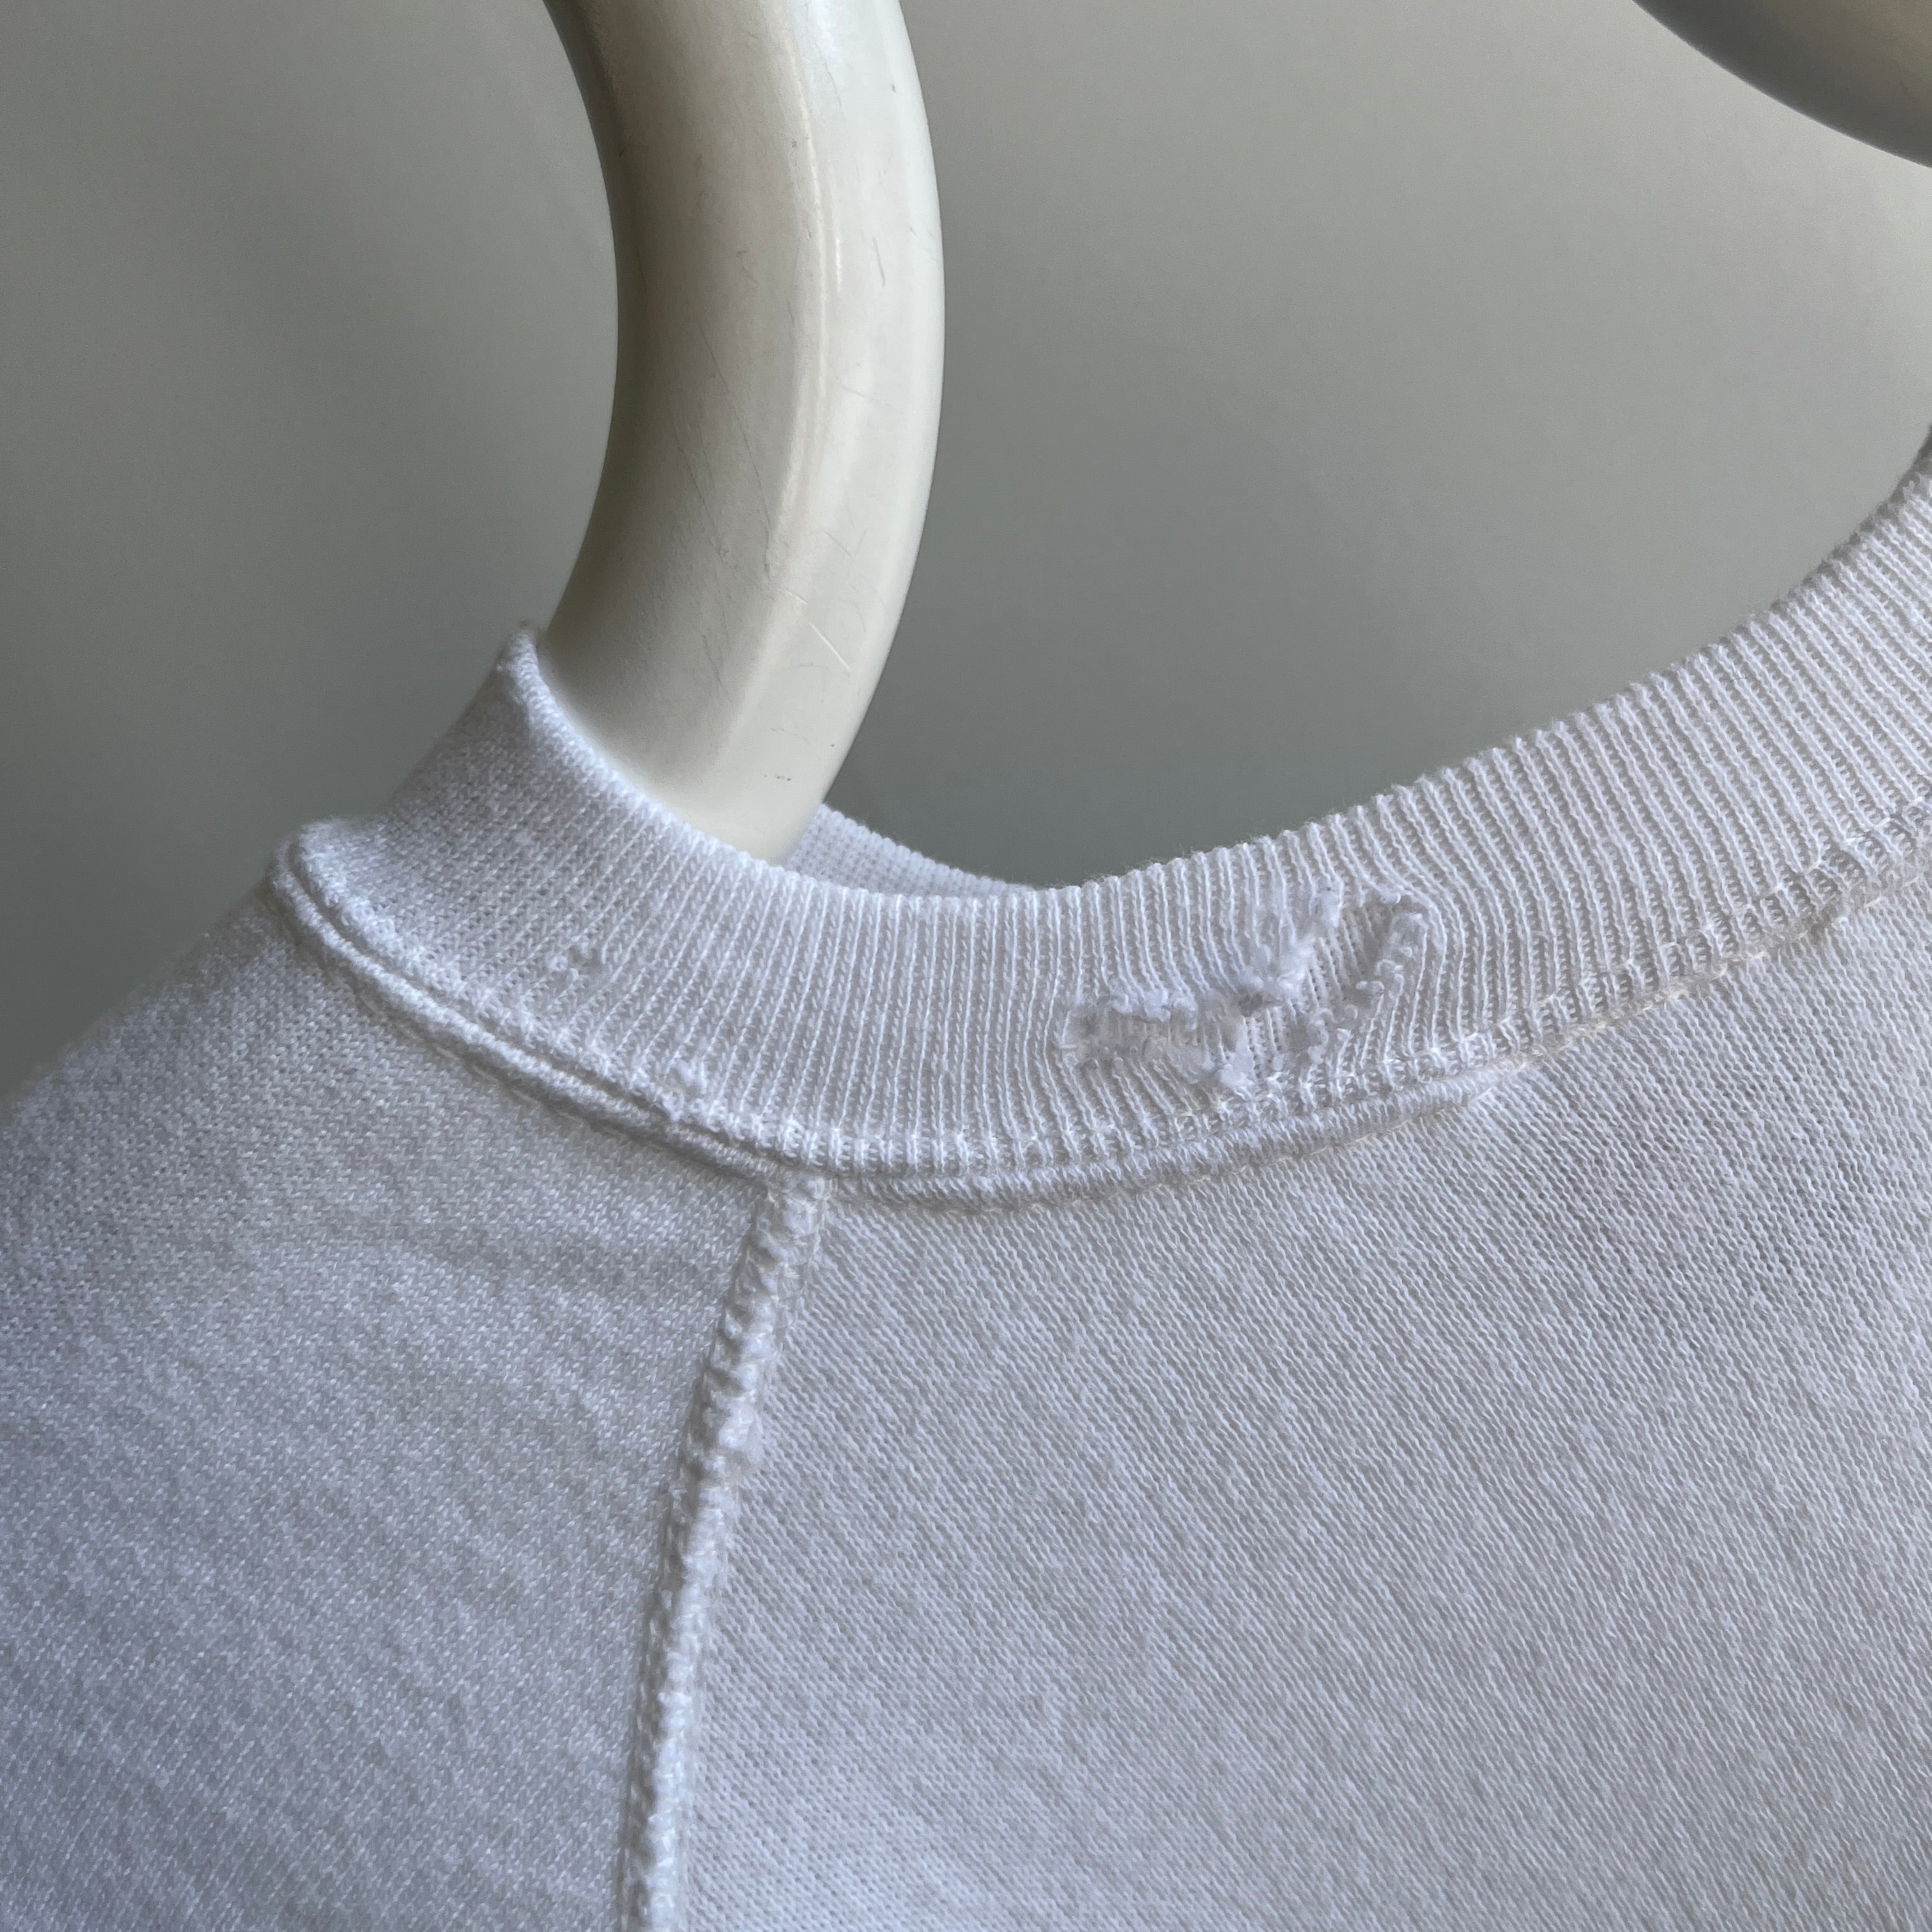 1980s Blank White Lightly Tattered Raglan Sweatshirt by Tultex